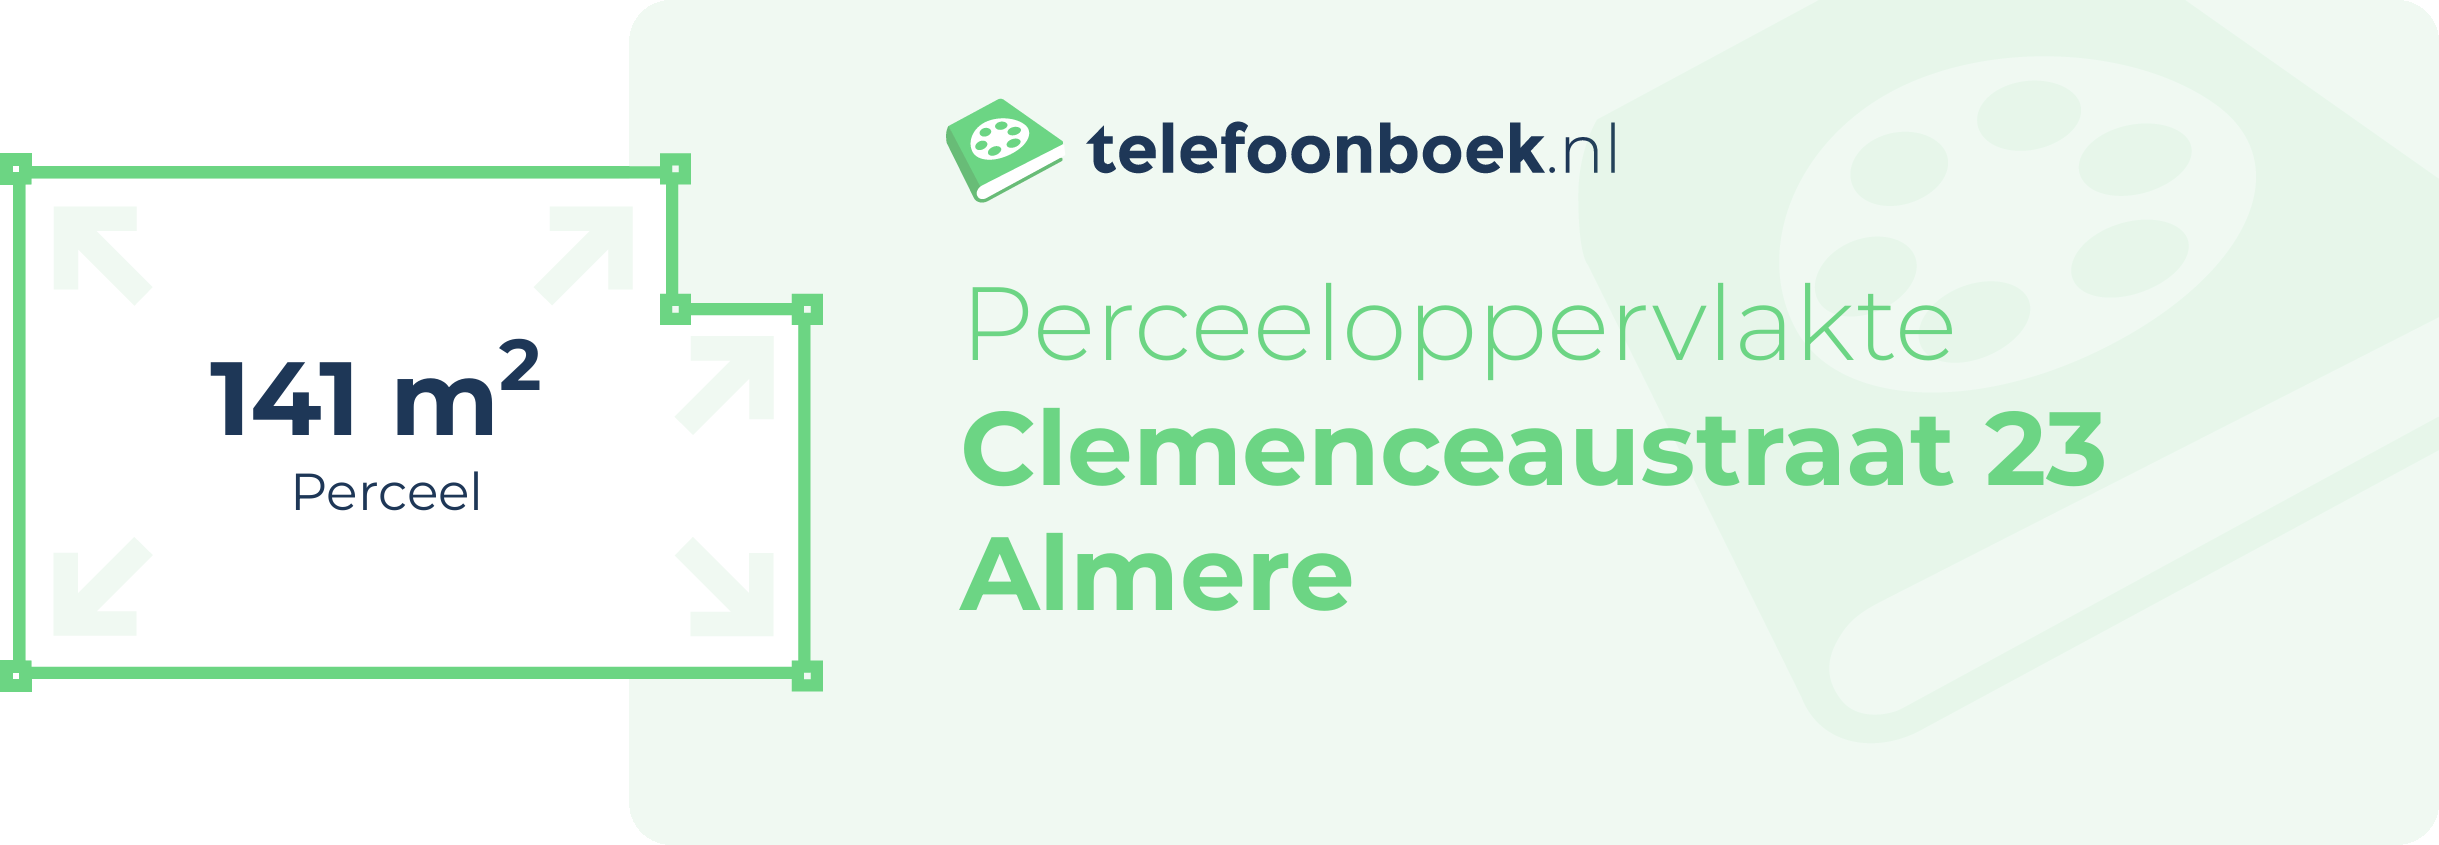 Perceeloppervlakte Clemenceaustraat 23 Almere